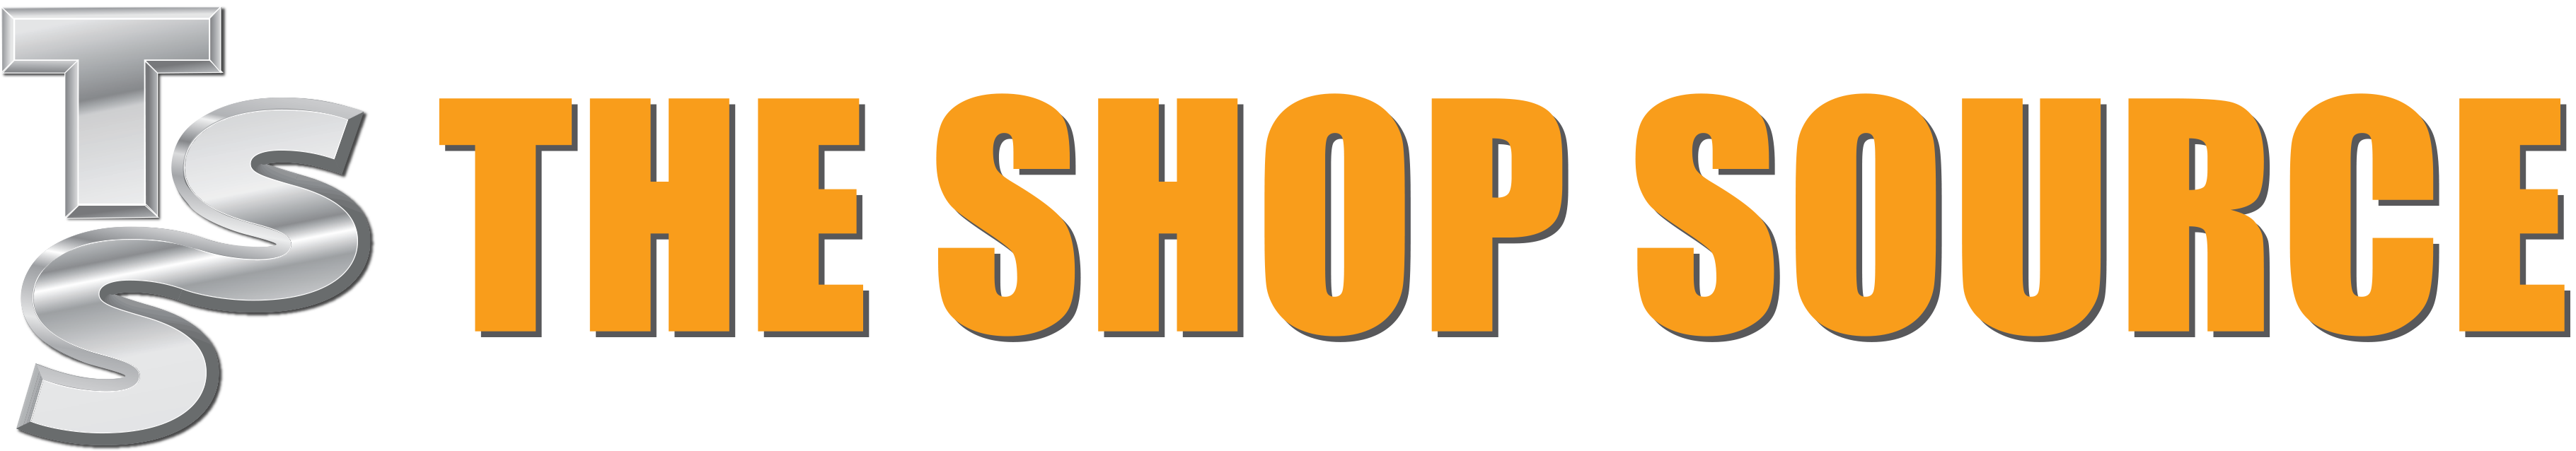 The Shop Source Logo